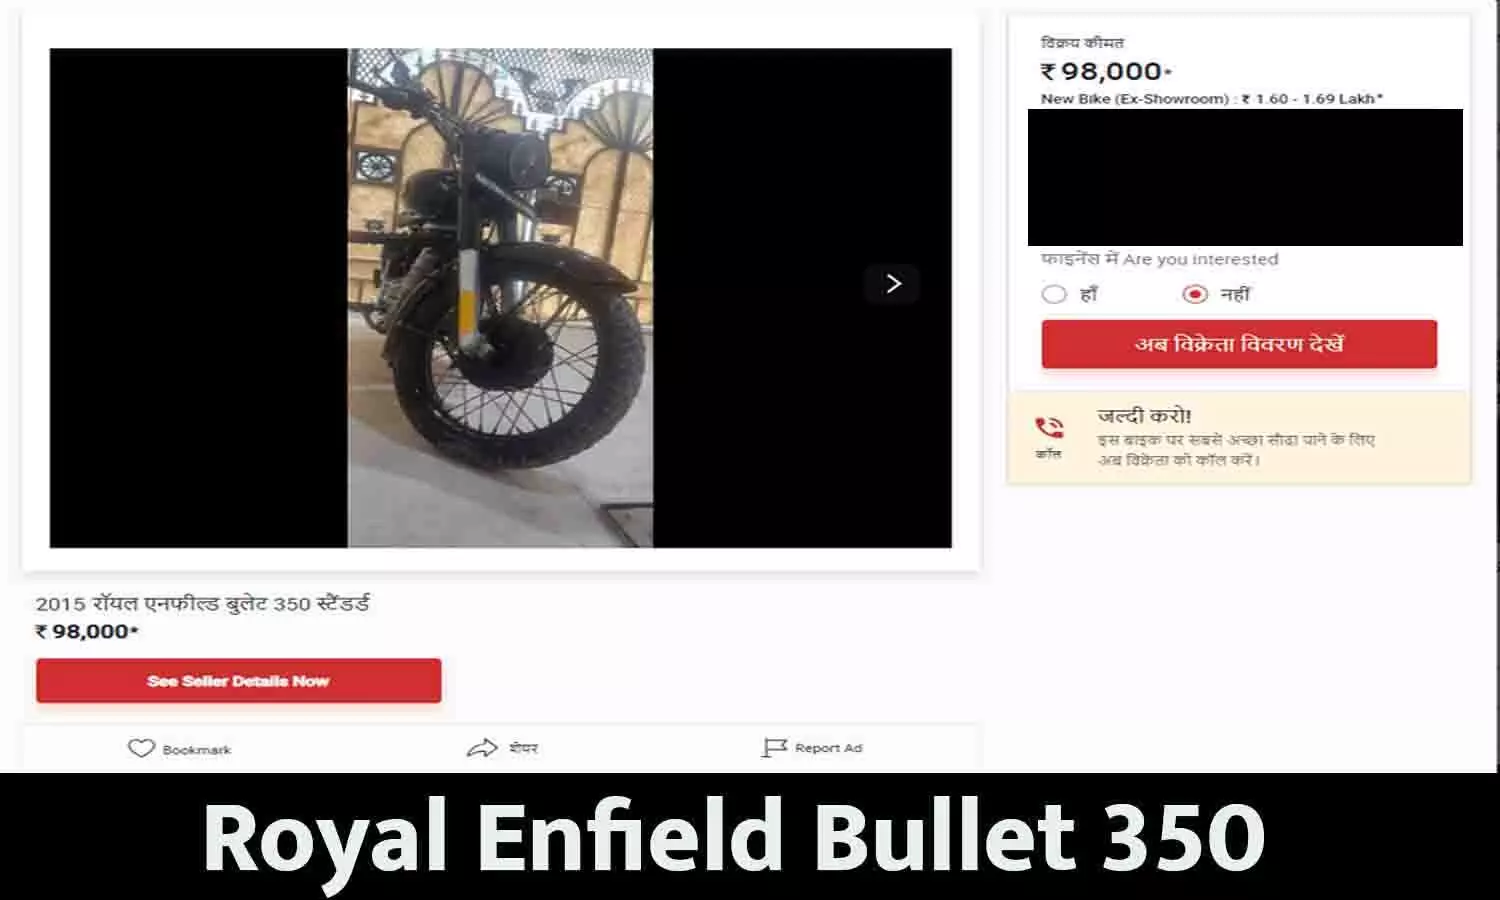 Royal Enfield Bullet 350 Price